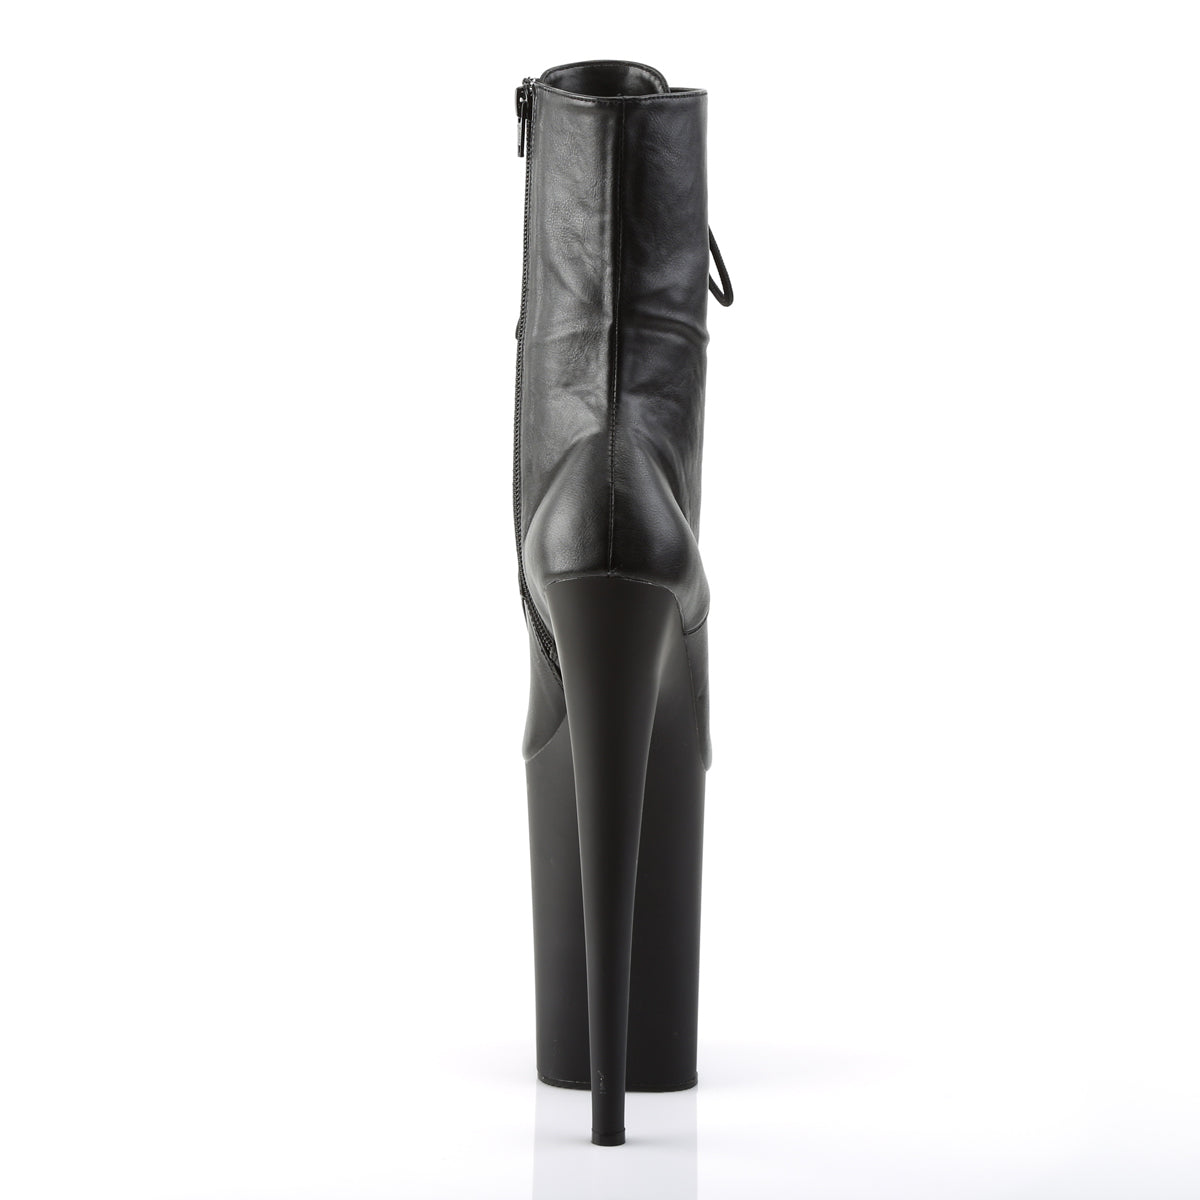 INFINITY-1020 Pleaser Black Faux Leather/Black Matte Platform Shoes [Ankle Boots]